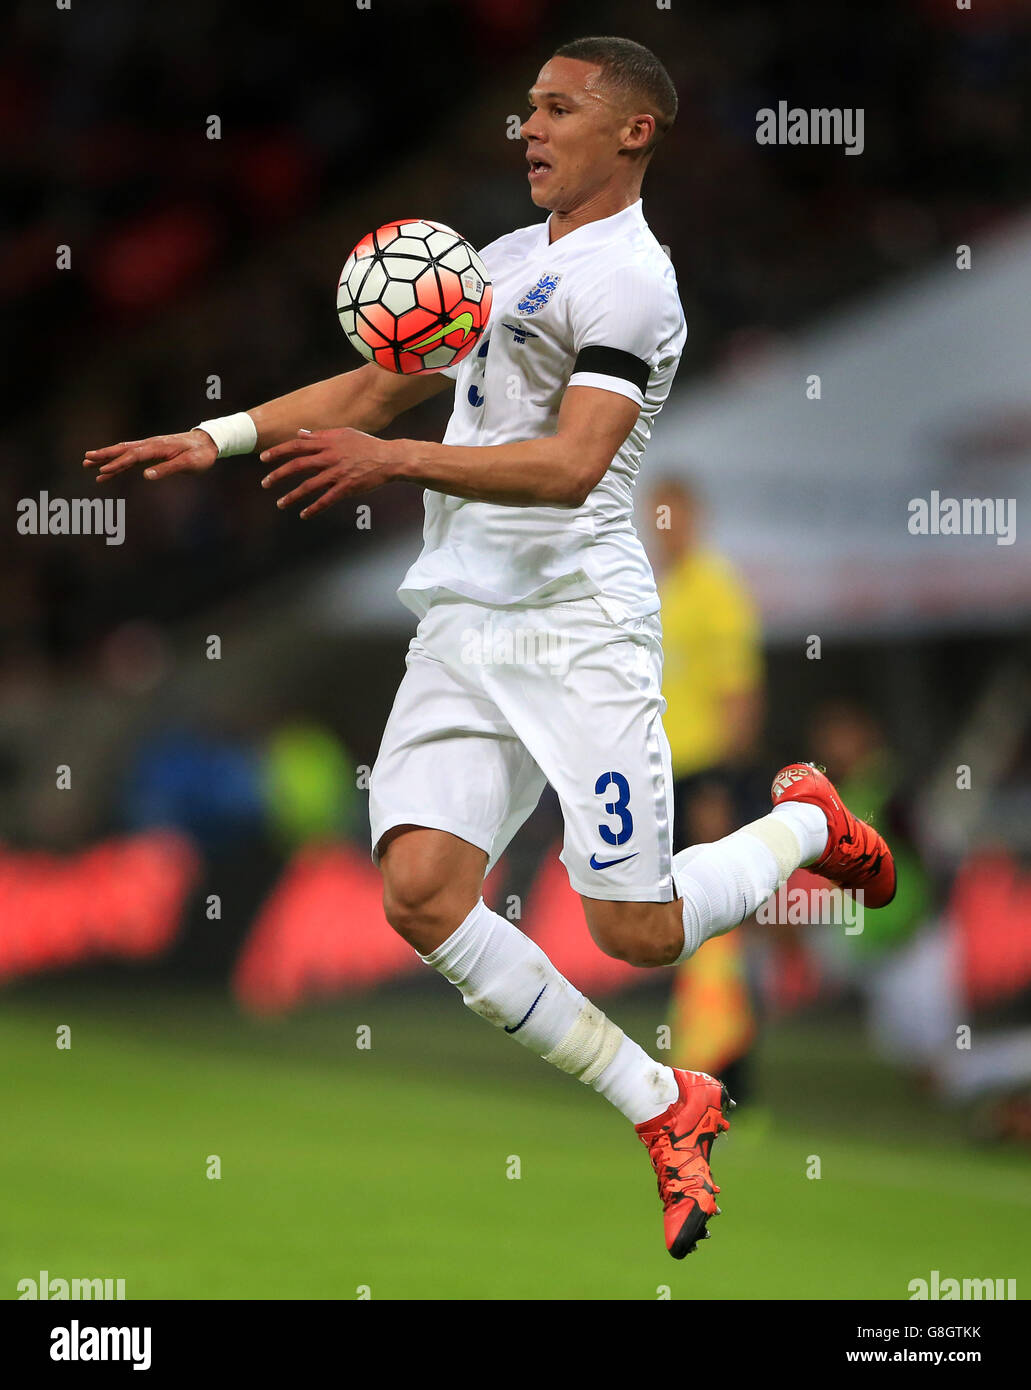 Inghilterra / Francia - International friendly - Stadio di Wembley. Kieran Gibbs, Inghilterra. Foto Stock